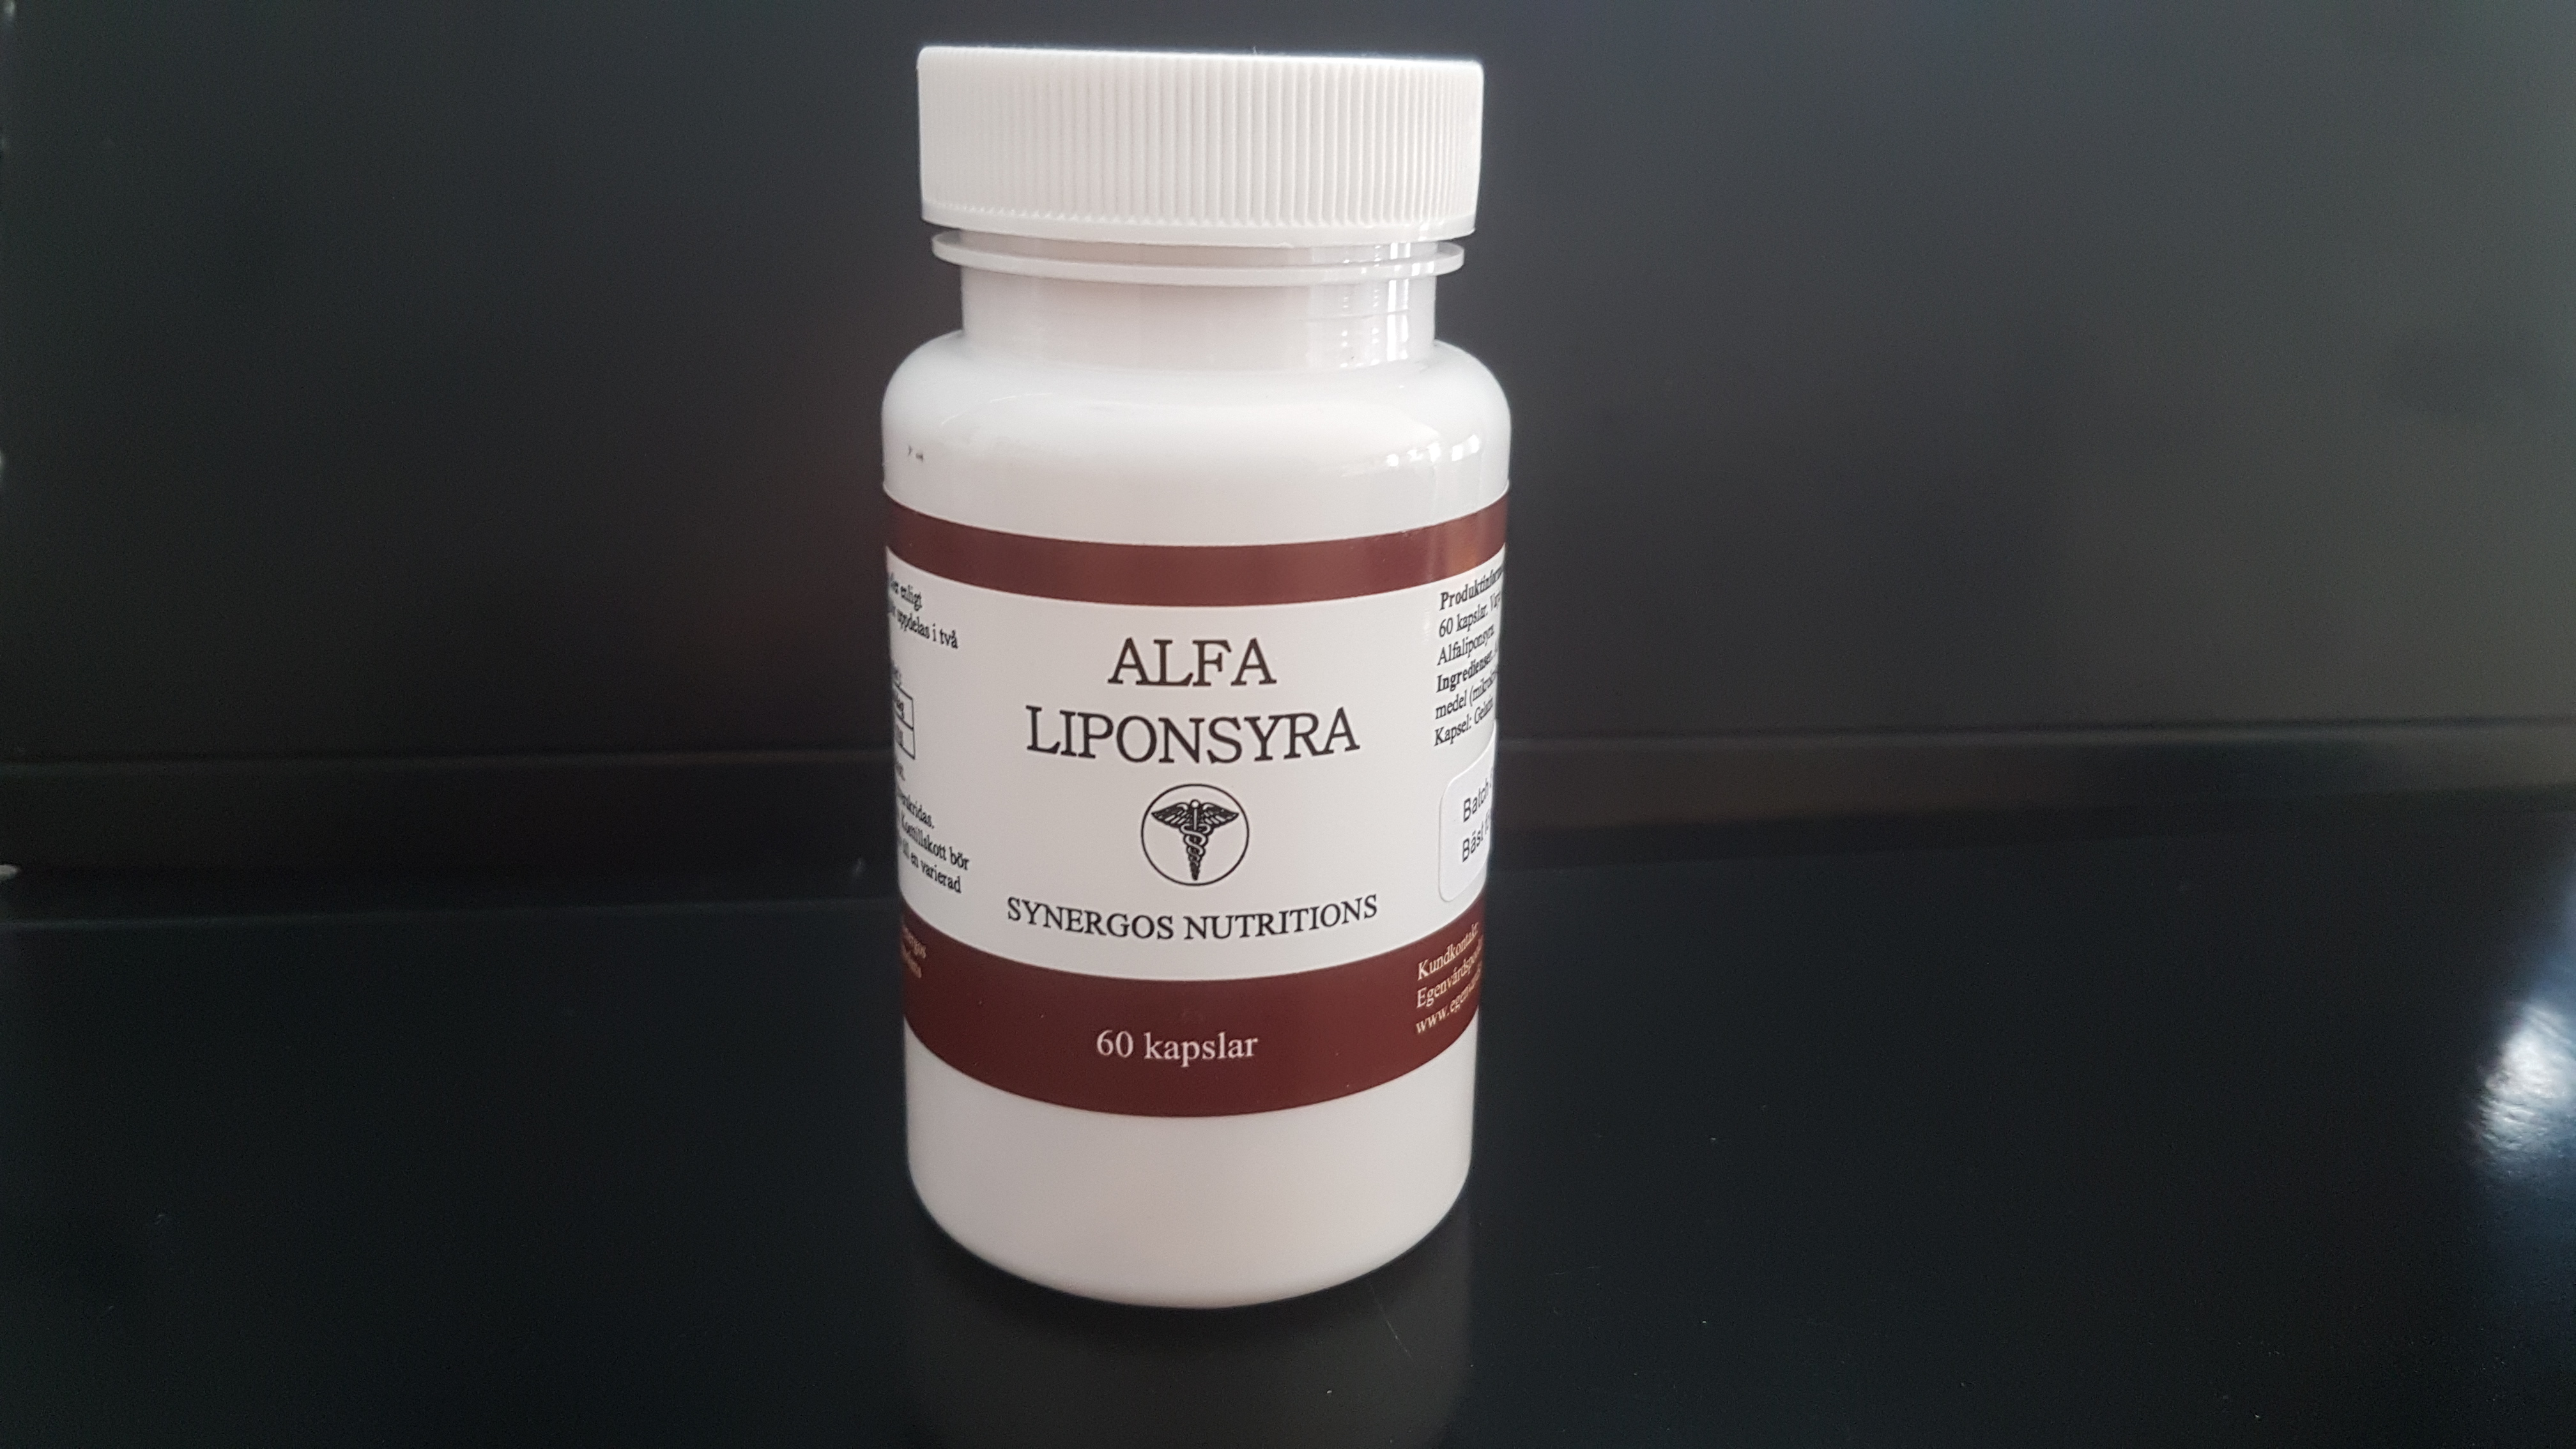 Alfa liponsyra, ALA (alpha lipoic acid)